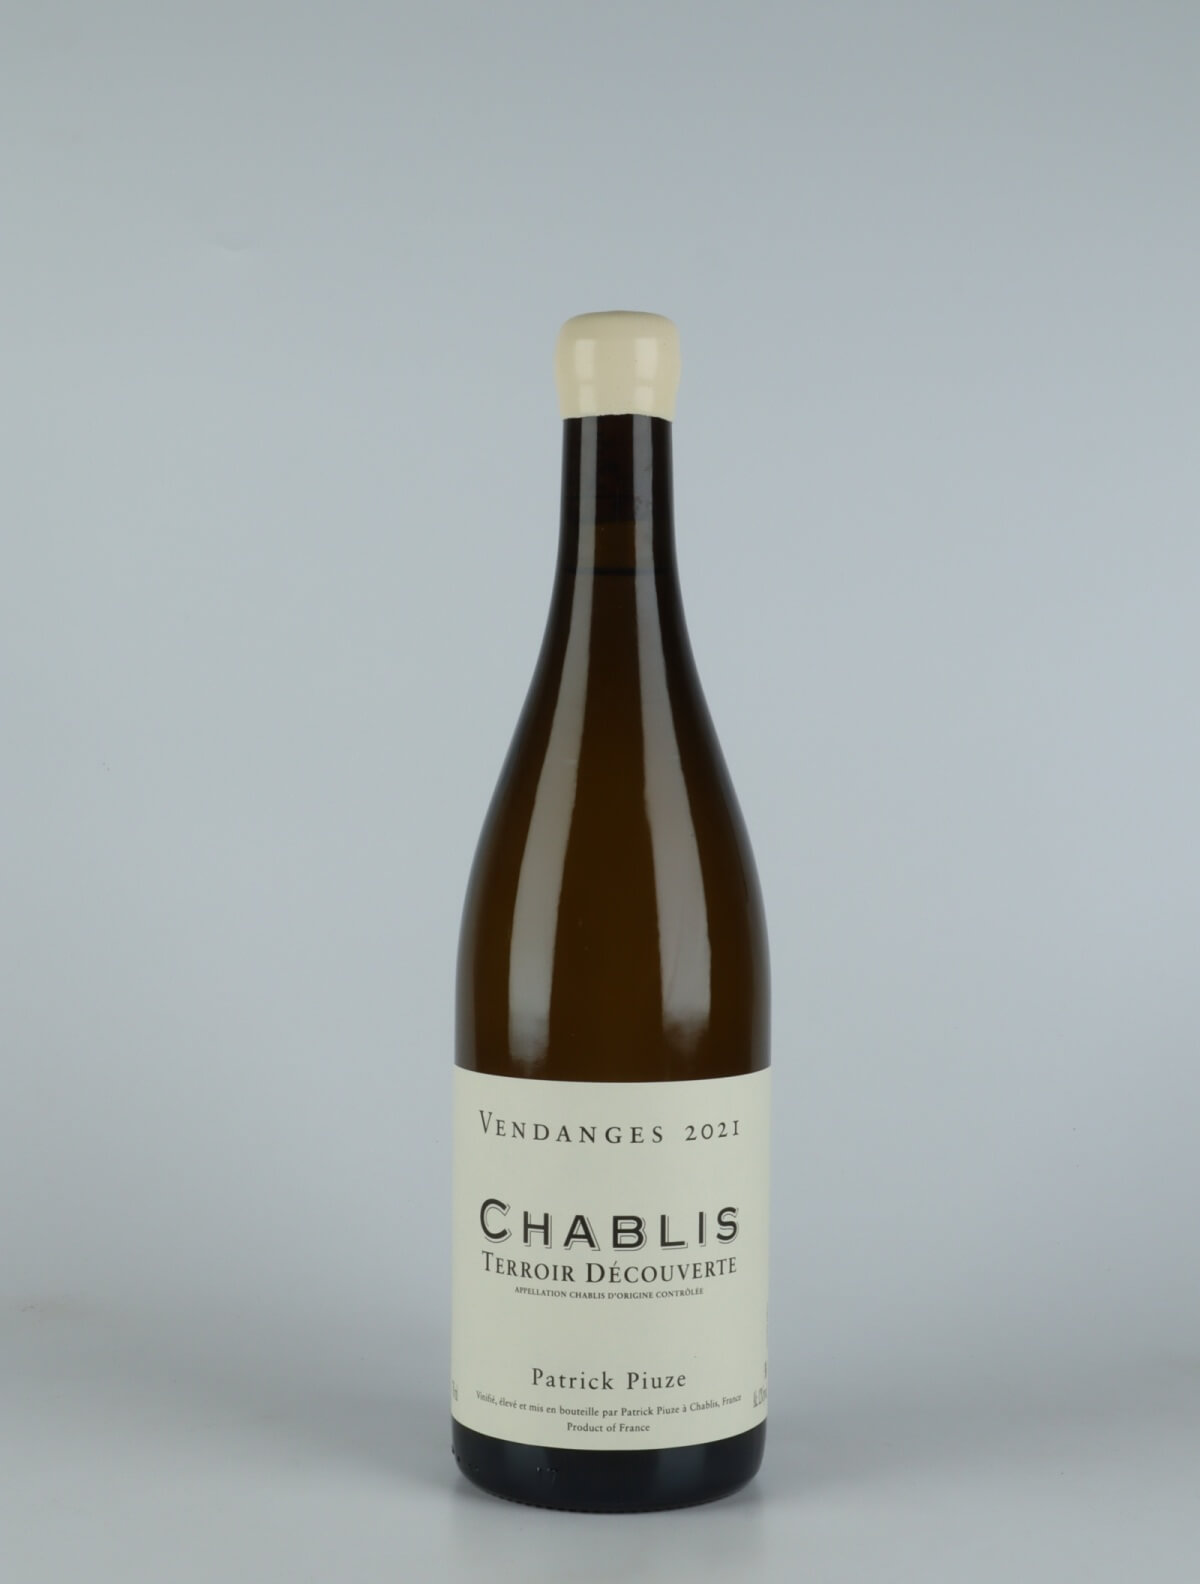 A bottle 2021 Chablis - Terroir Découverte White wine from Patrick Piuze, Burgundy in France